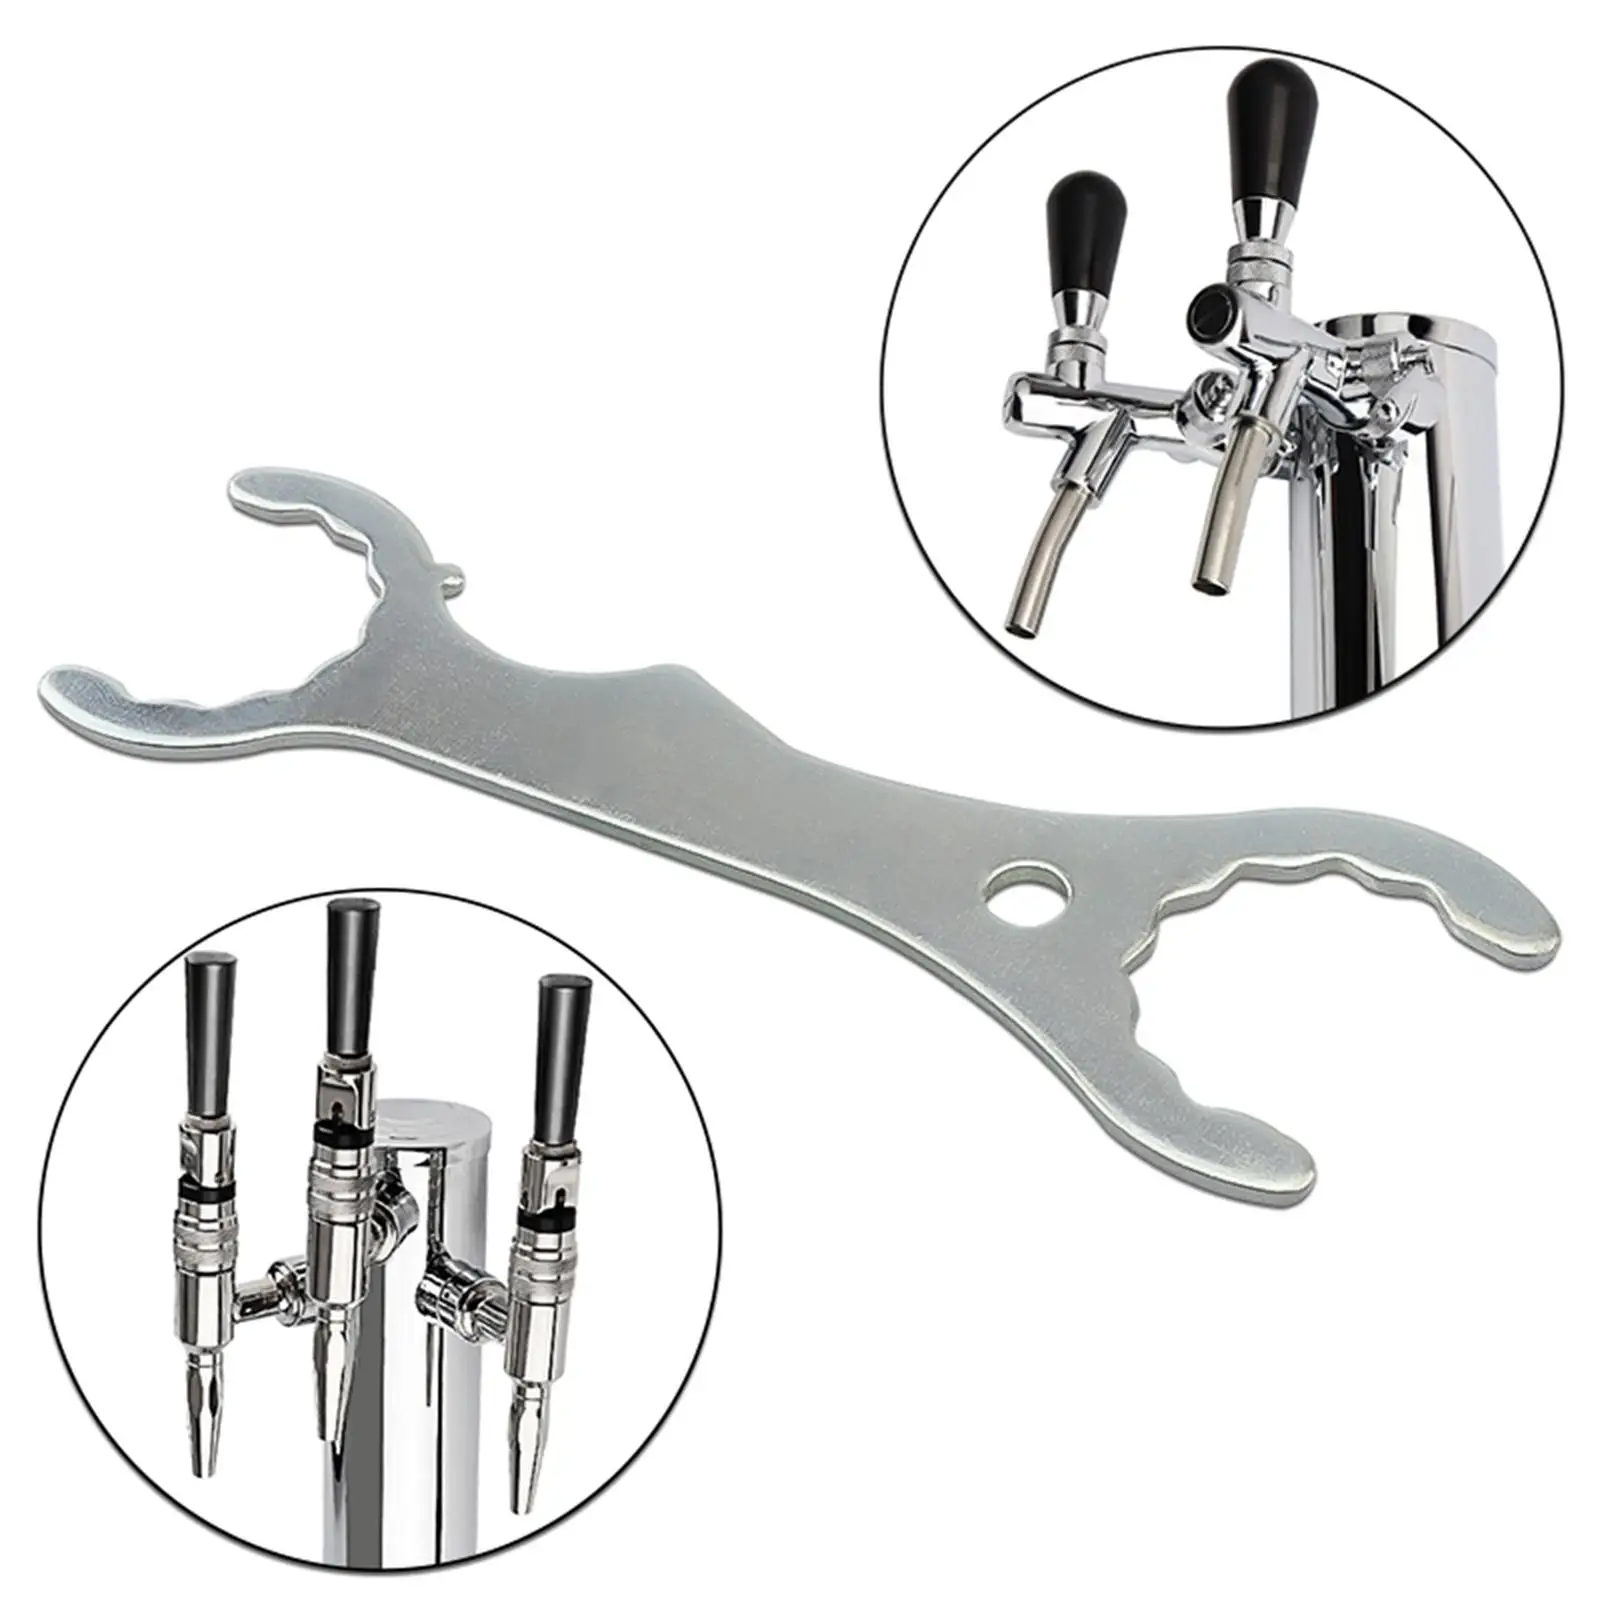 Multifunctional Beer Faucet Wrench Beer Repair Tools for Coupler Tools